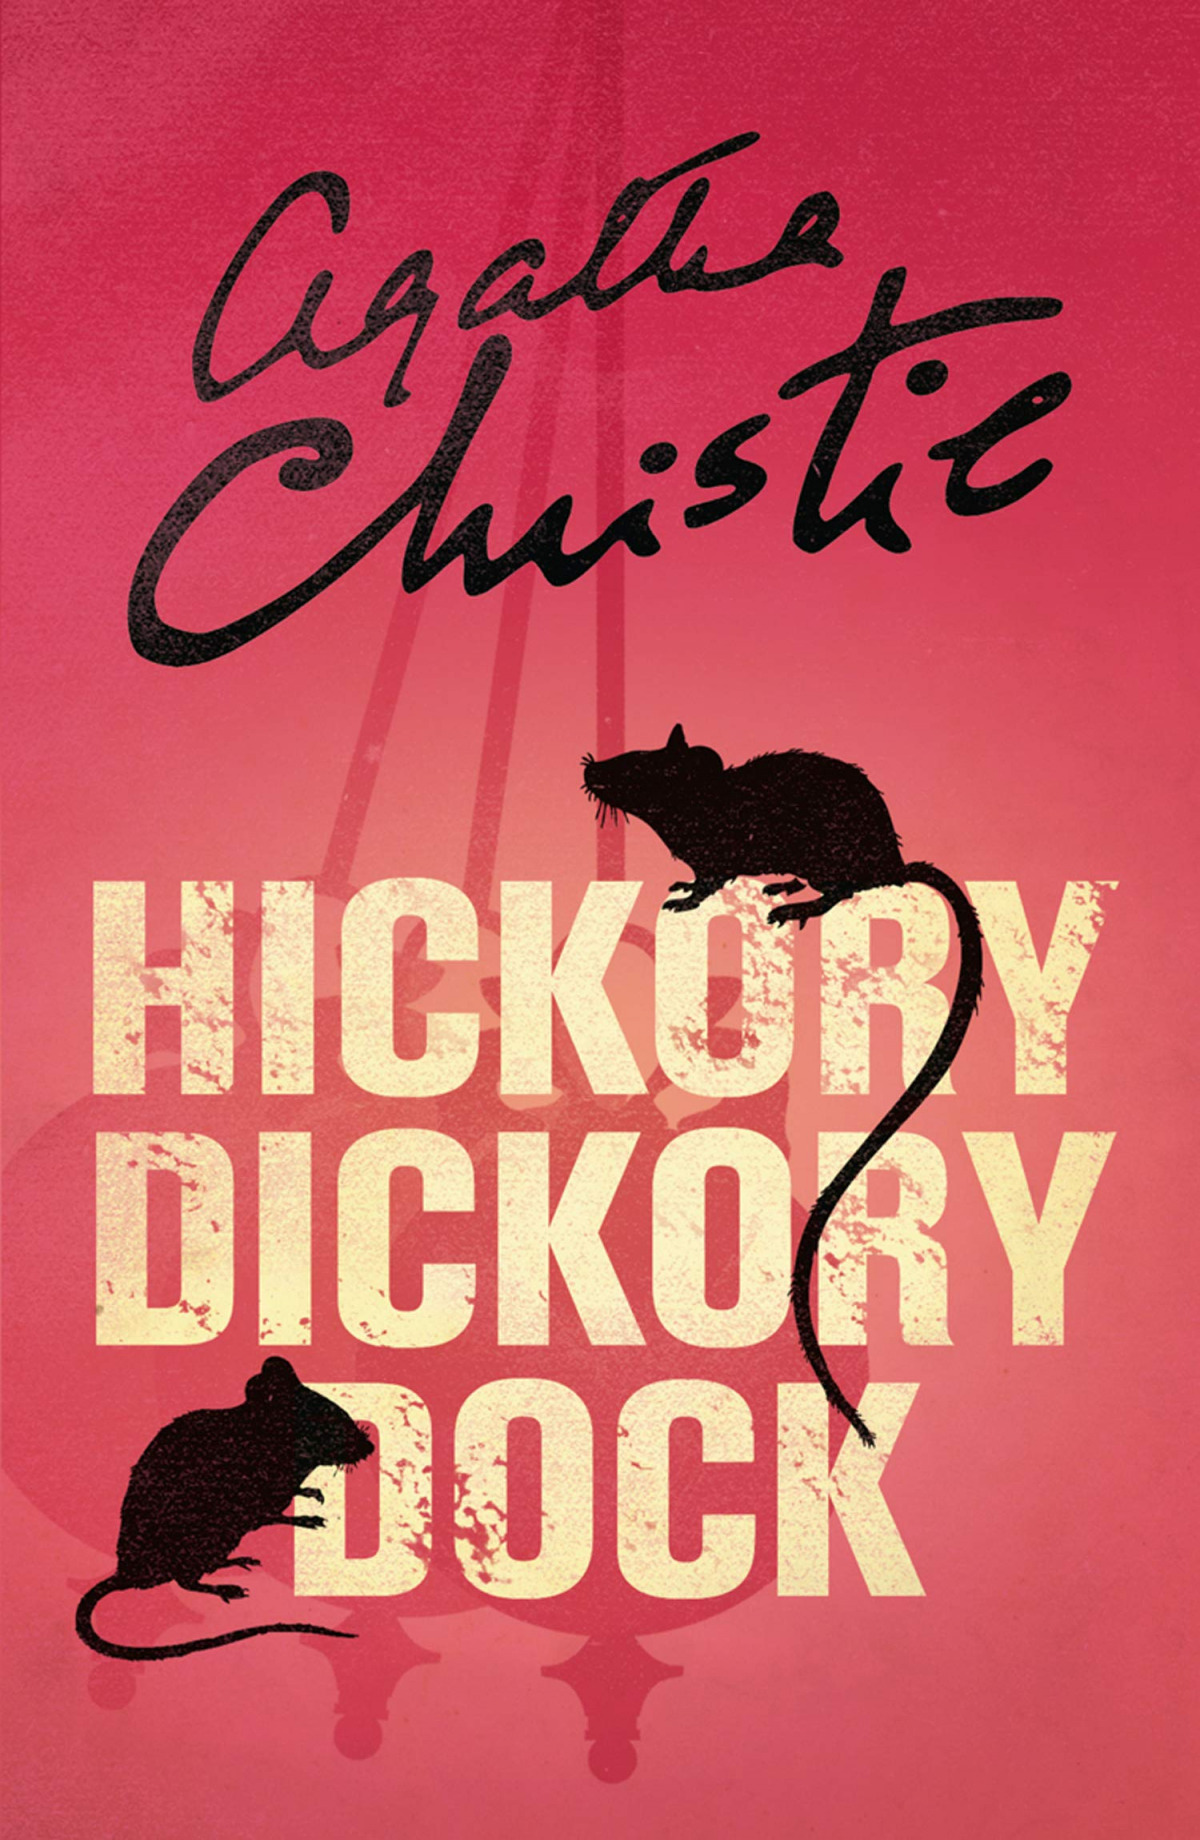 Poirot ù hickory dickory dock - Christie, Agatha